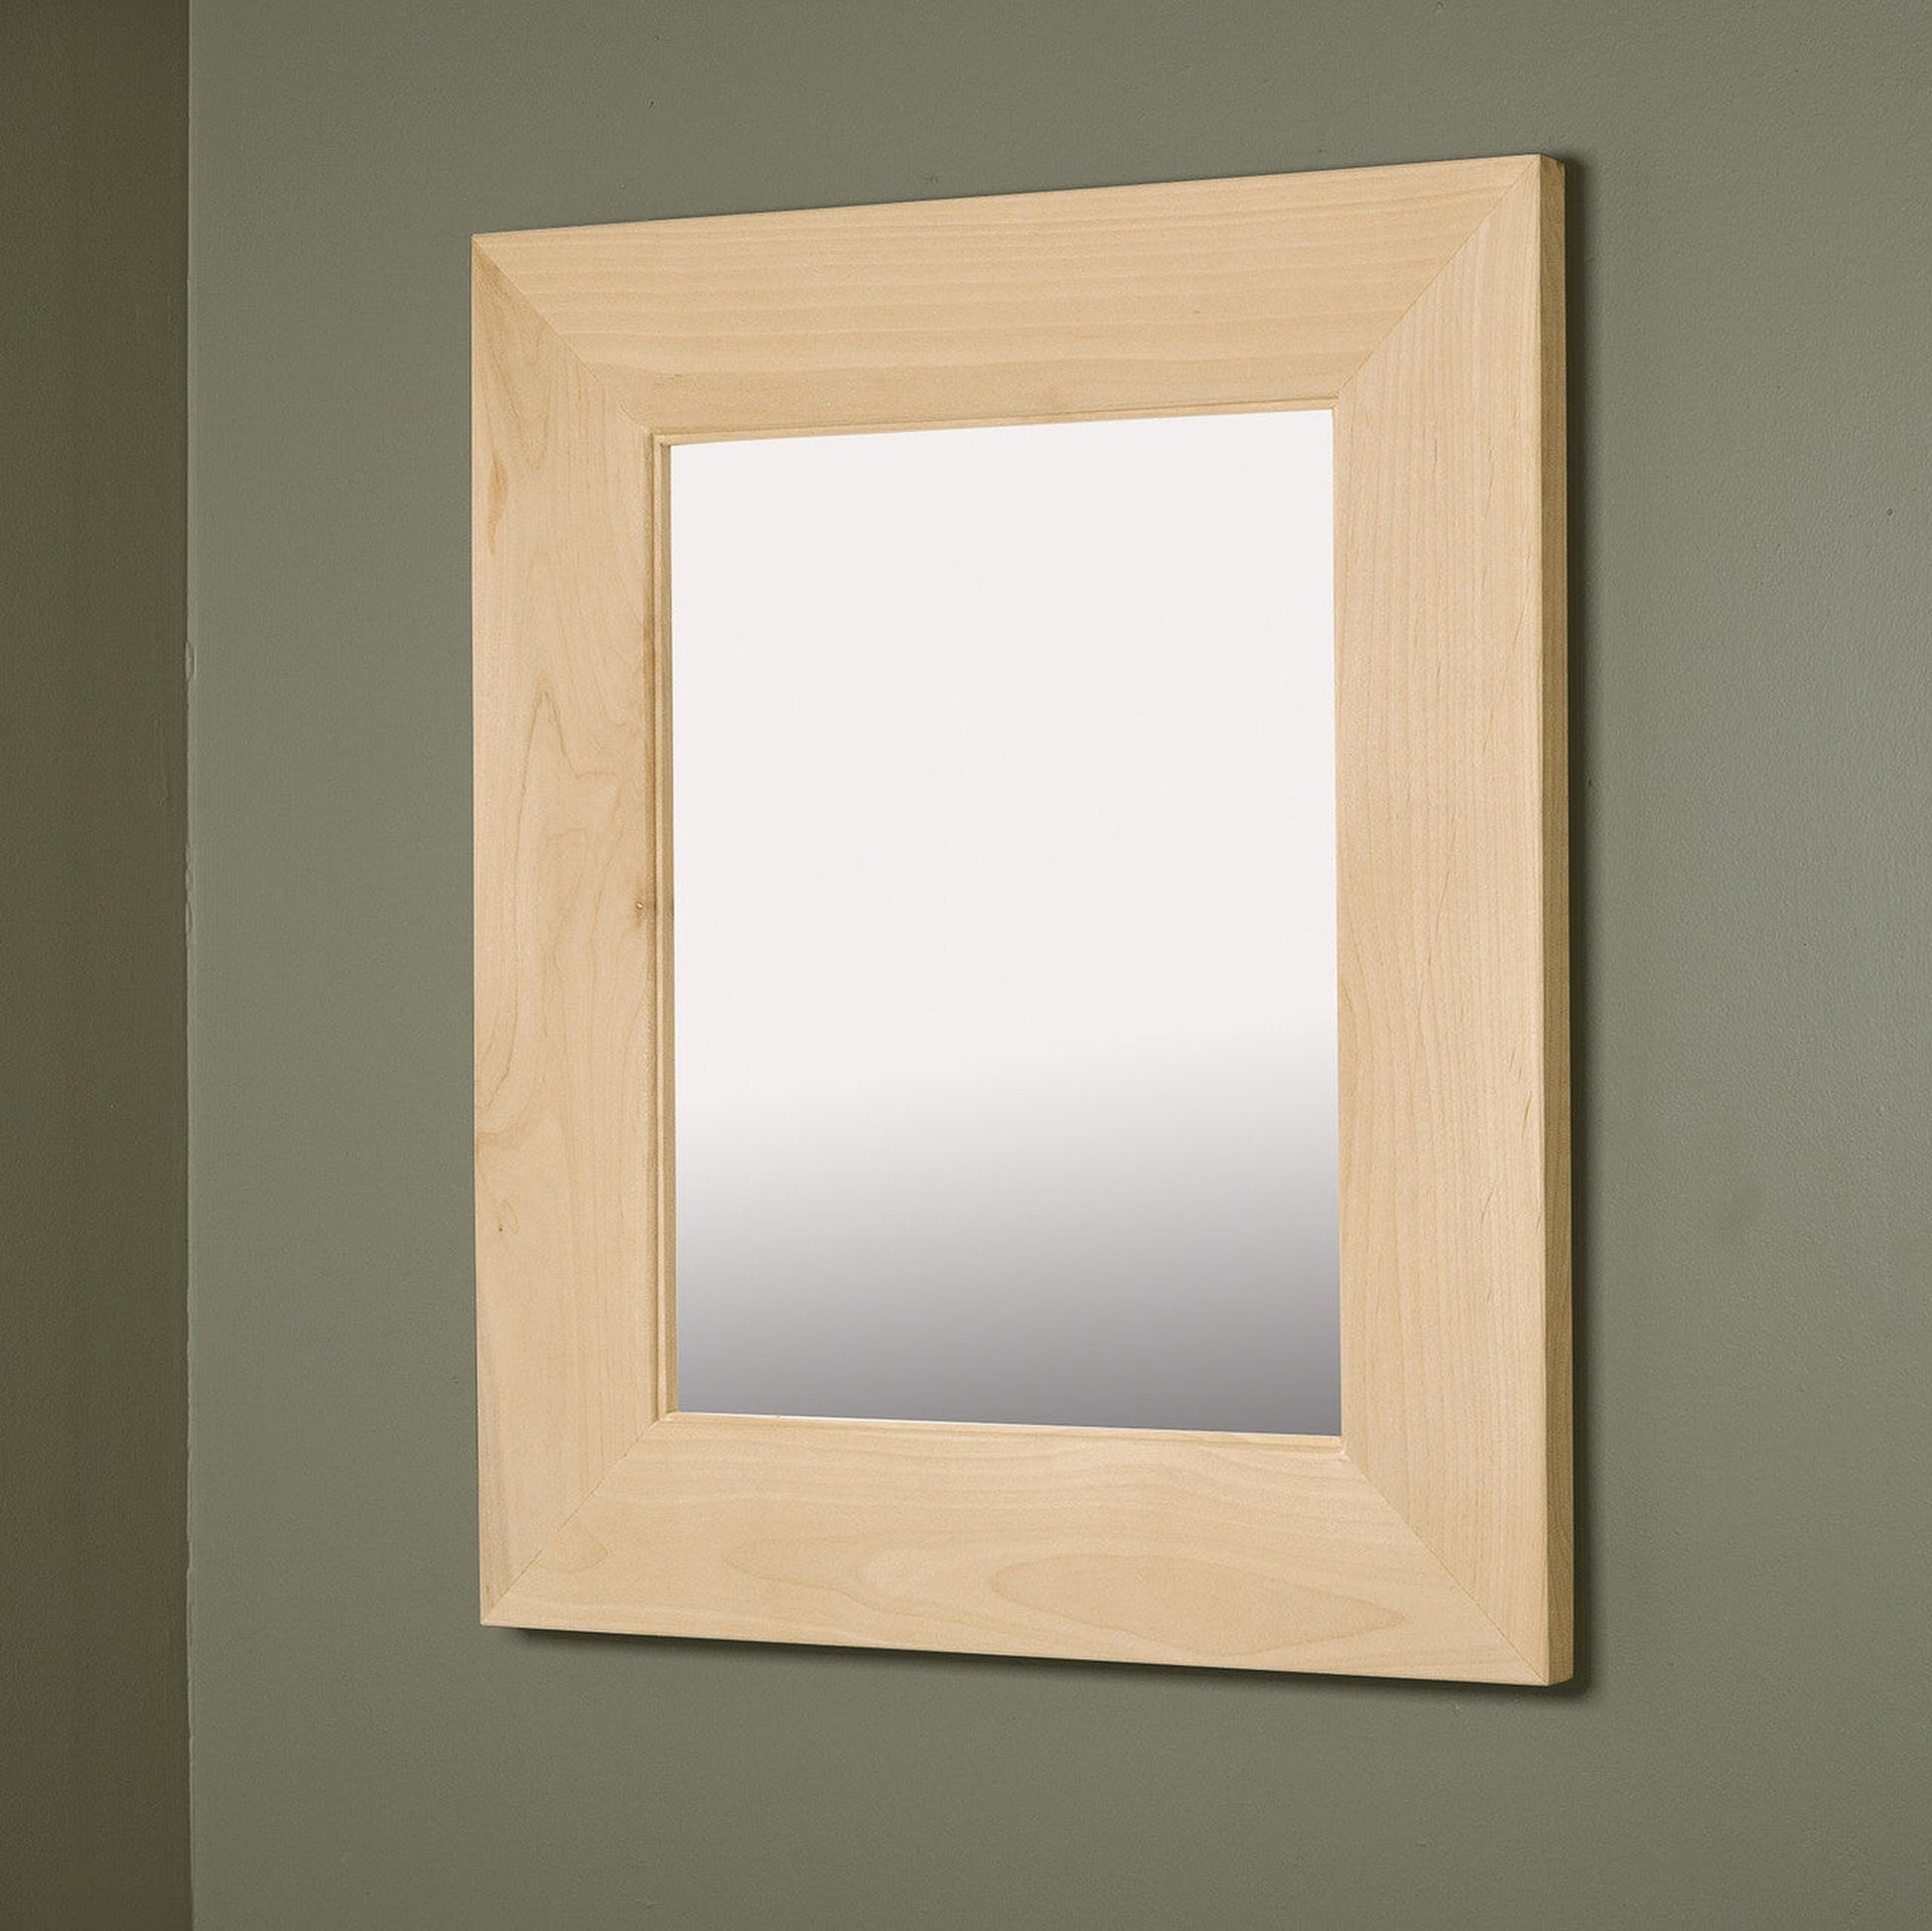 Fox Hollow Furnishings 14" x 18" Unfinished Flat Edge Standard 4" Depth White Interior Mirrored Medicine Cabinet